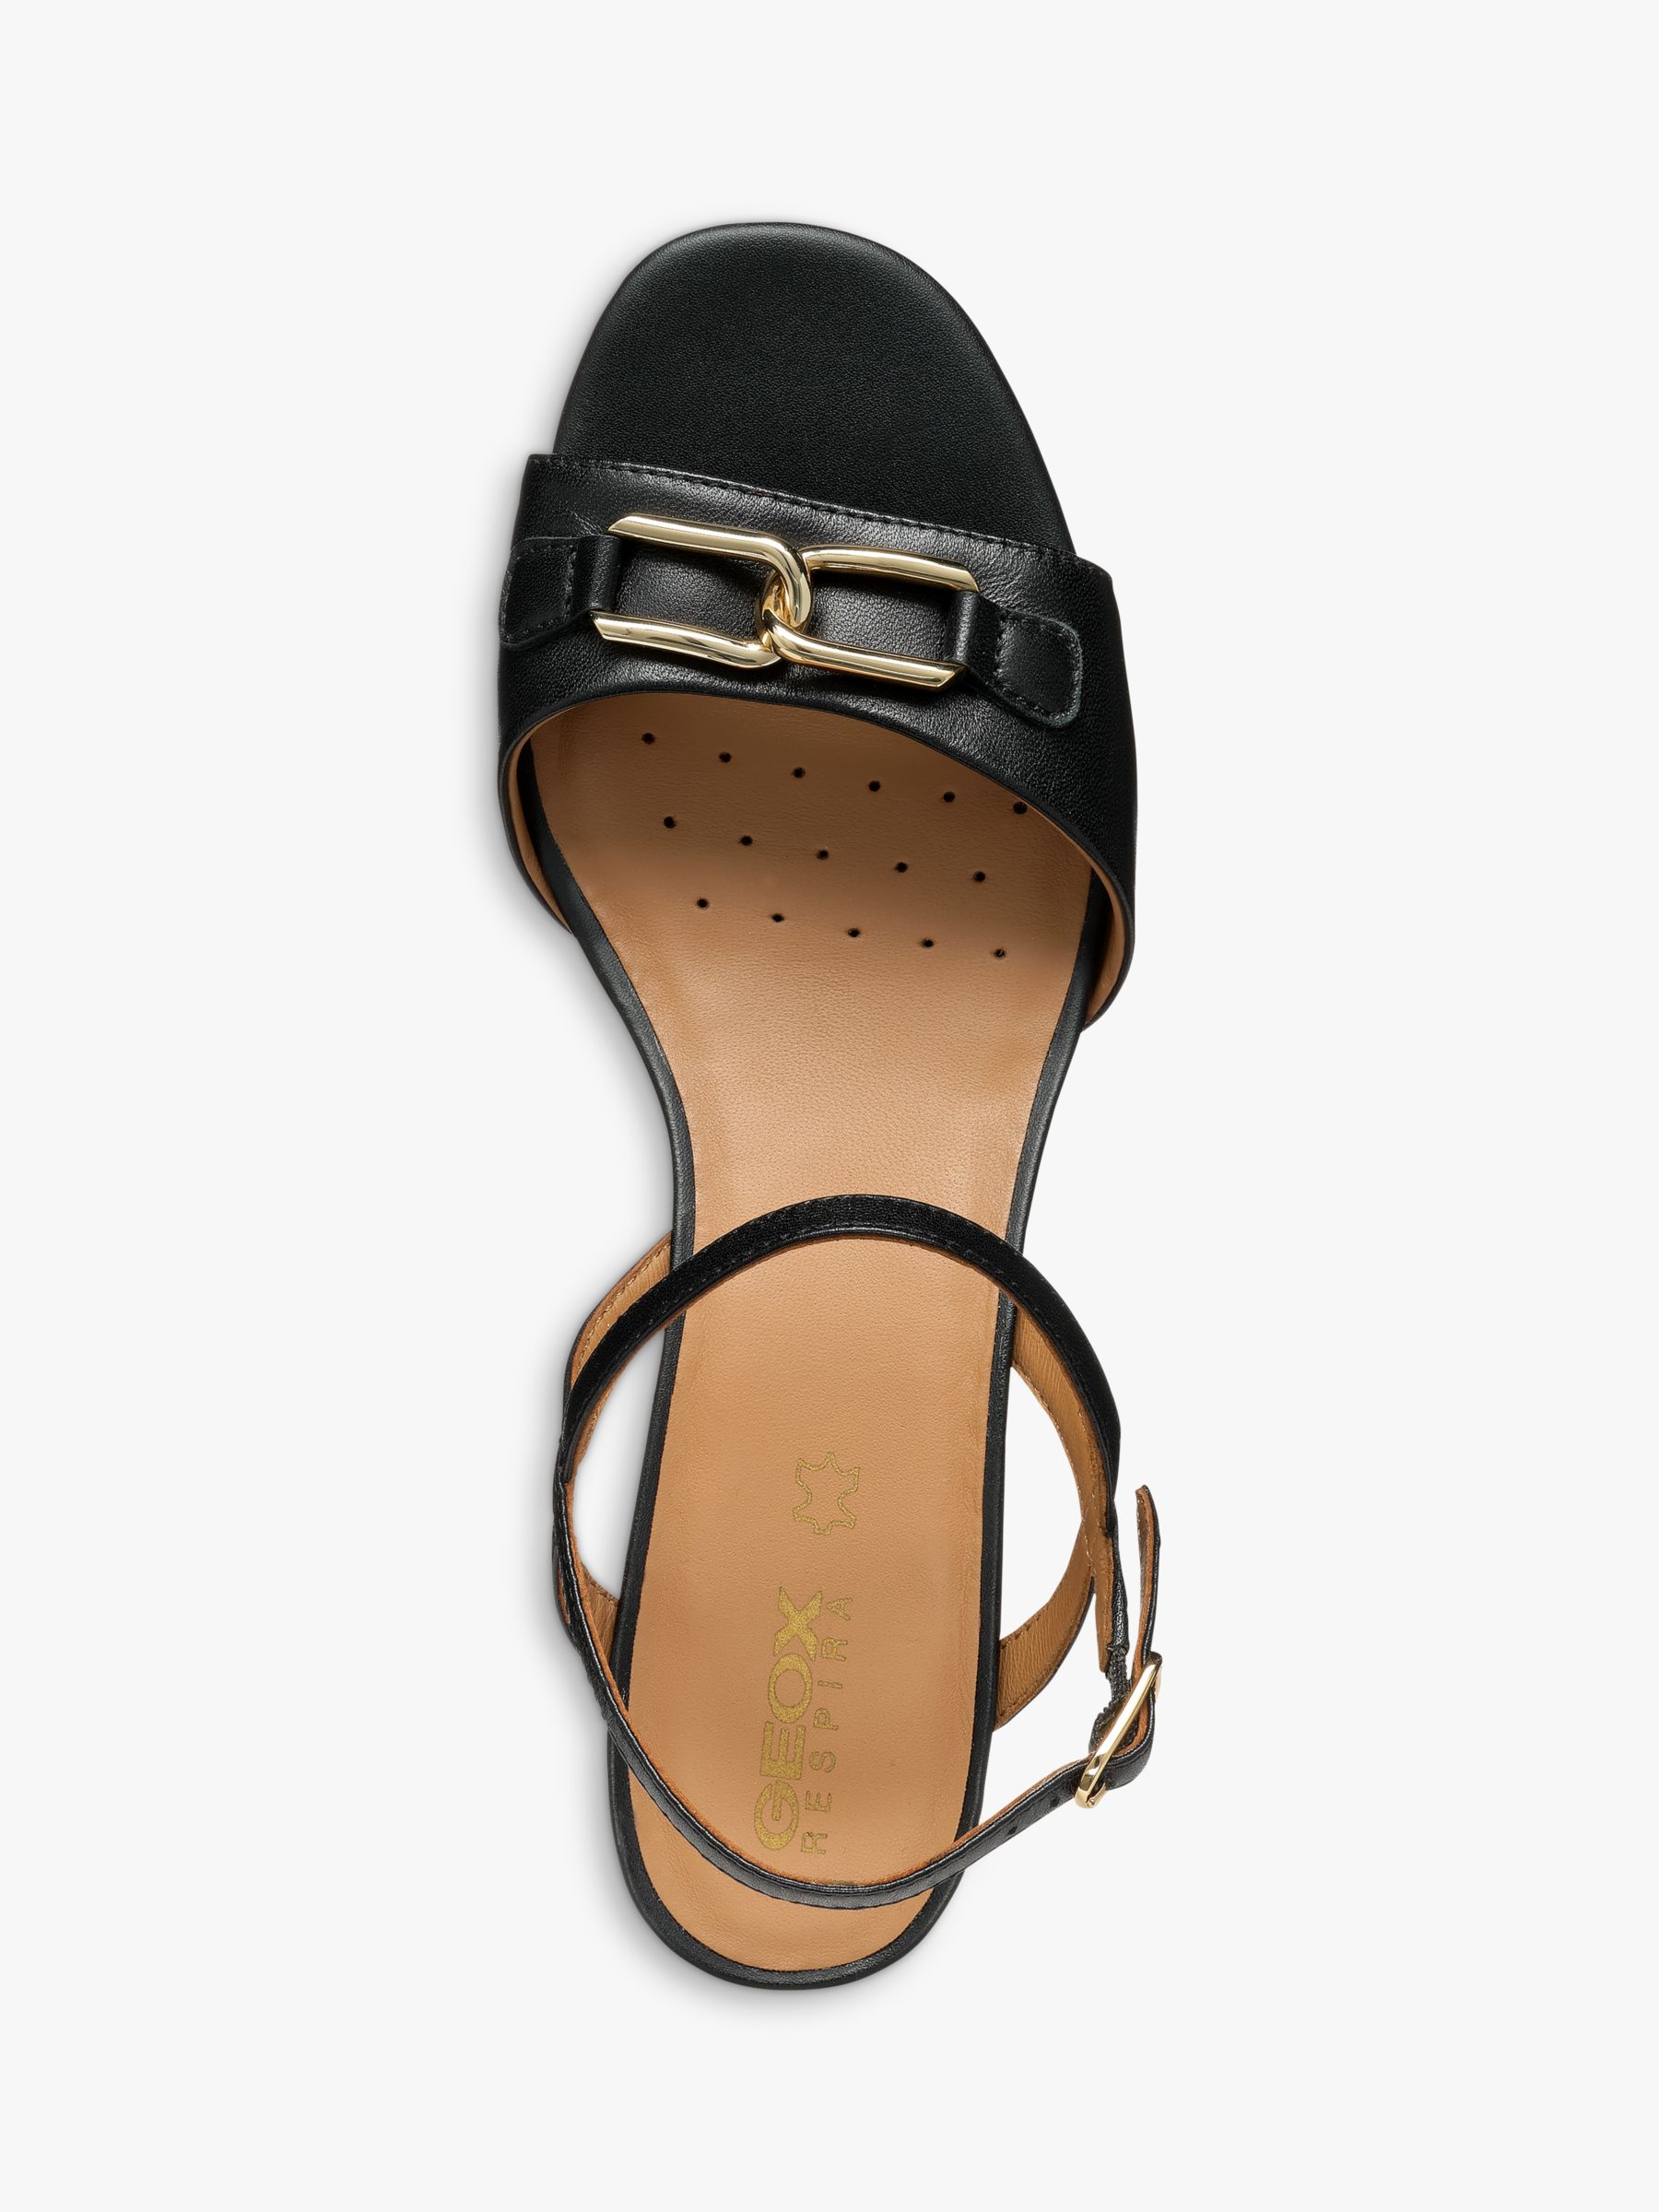 Buy Geox New Eraklia Leather Sandals Online at johnlewis.com